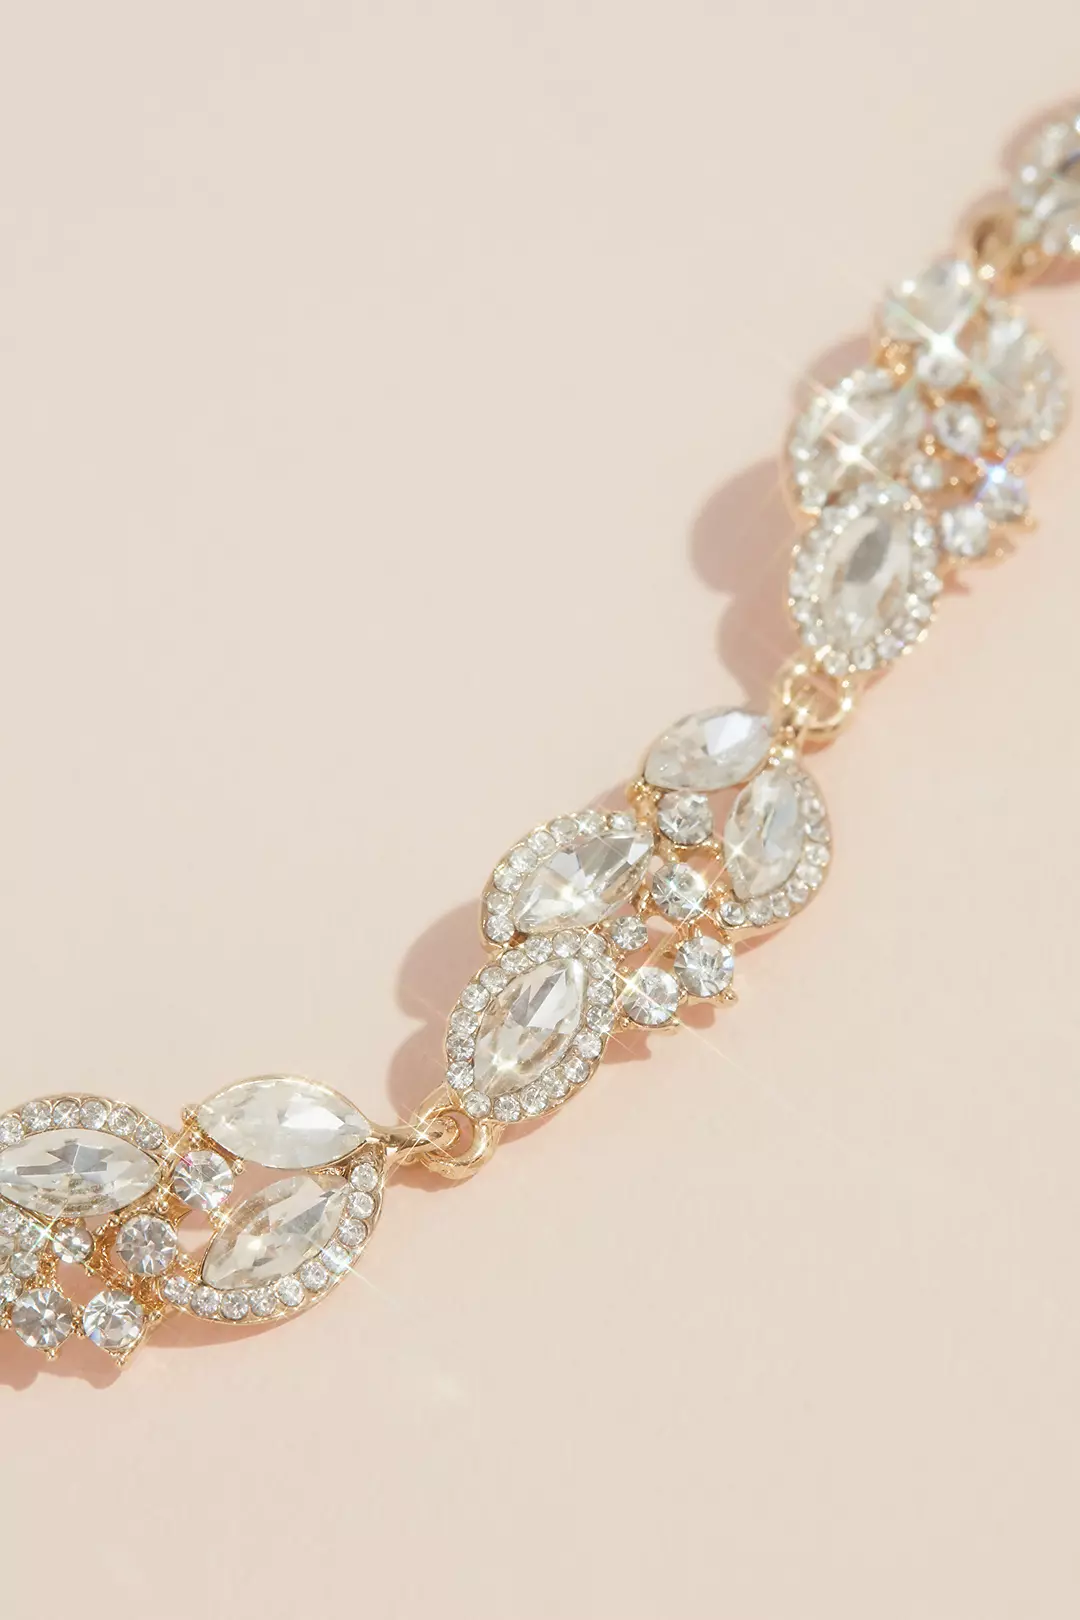 Haloed Marquise Crystal Clusters Bracelet Image